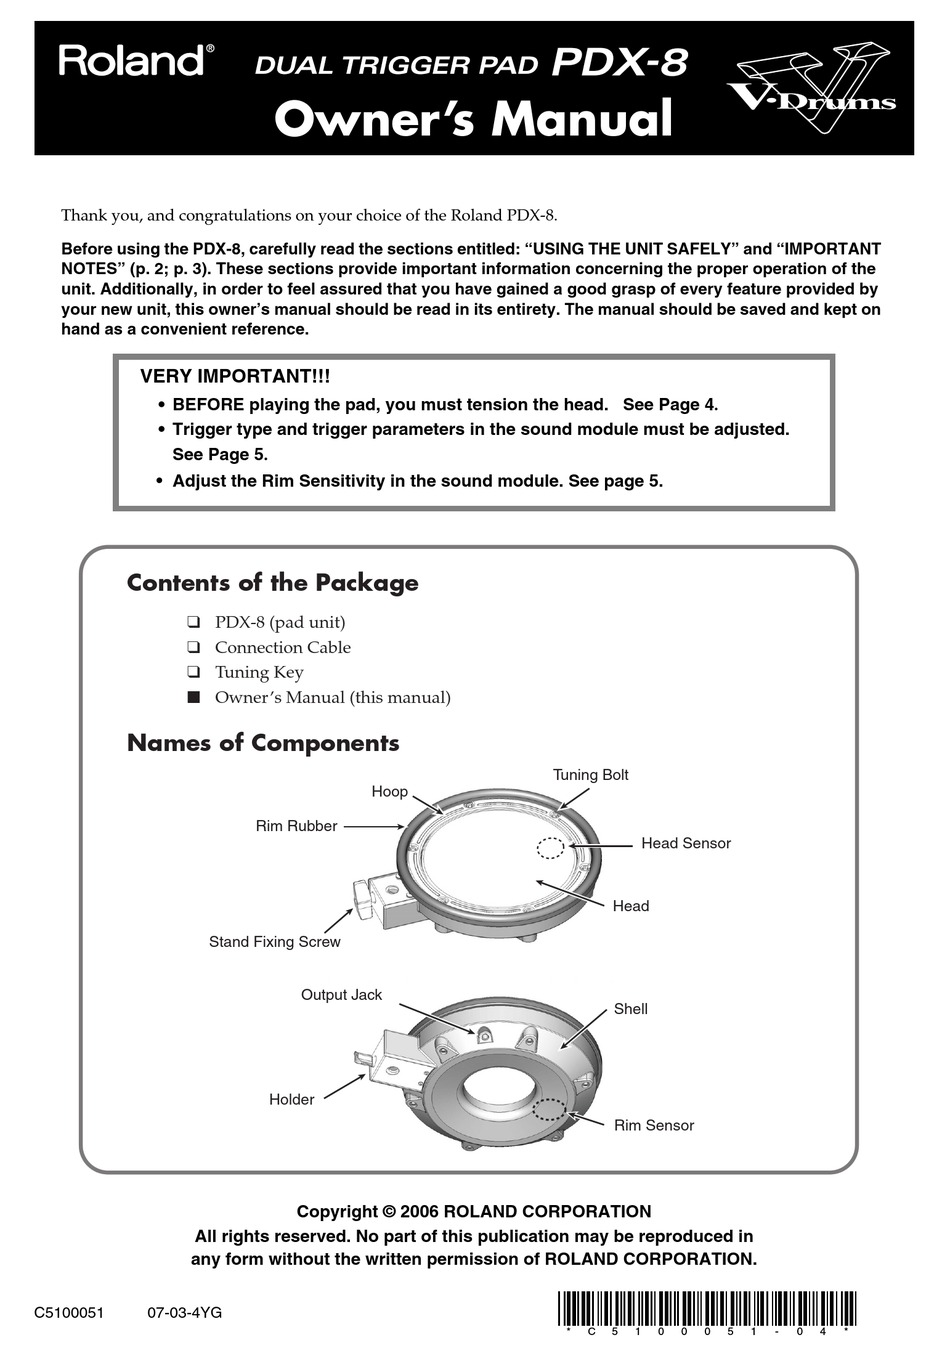 ROLAND PDX-8 OWNER'S MANUAL Pdf Download | ManualsLib